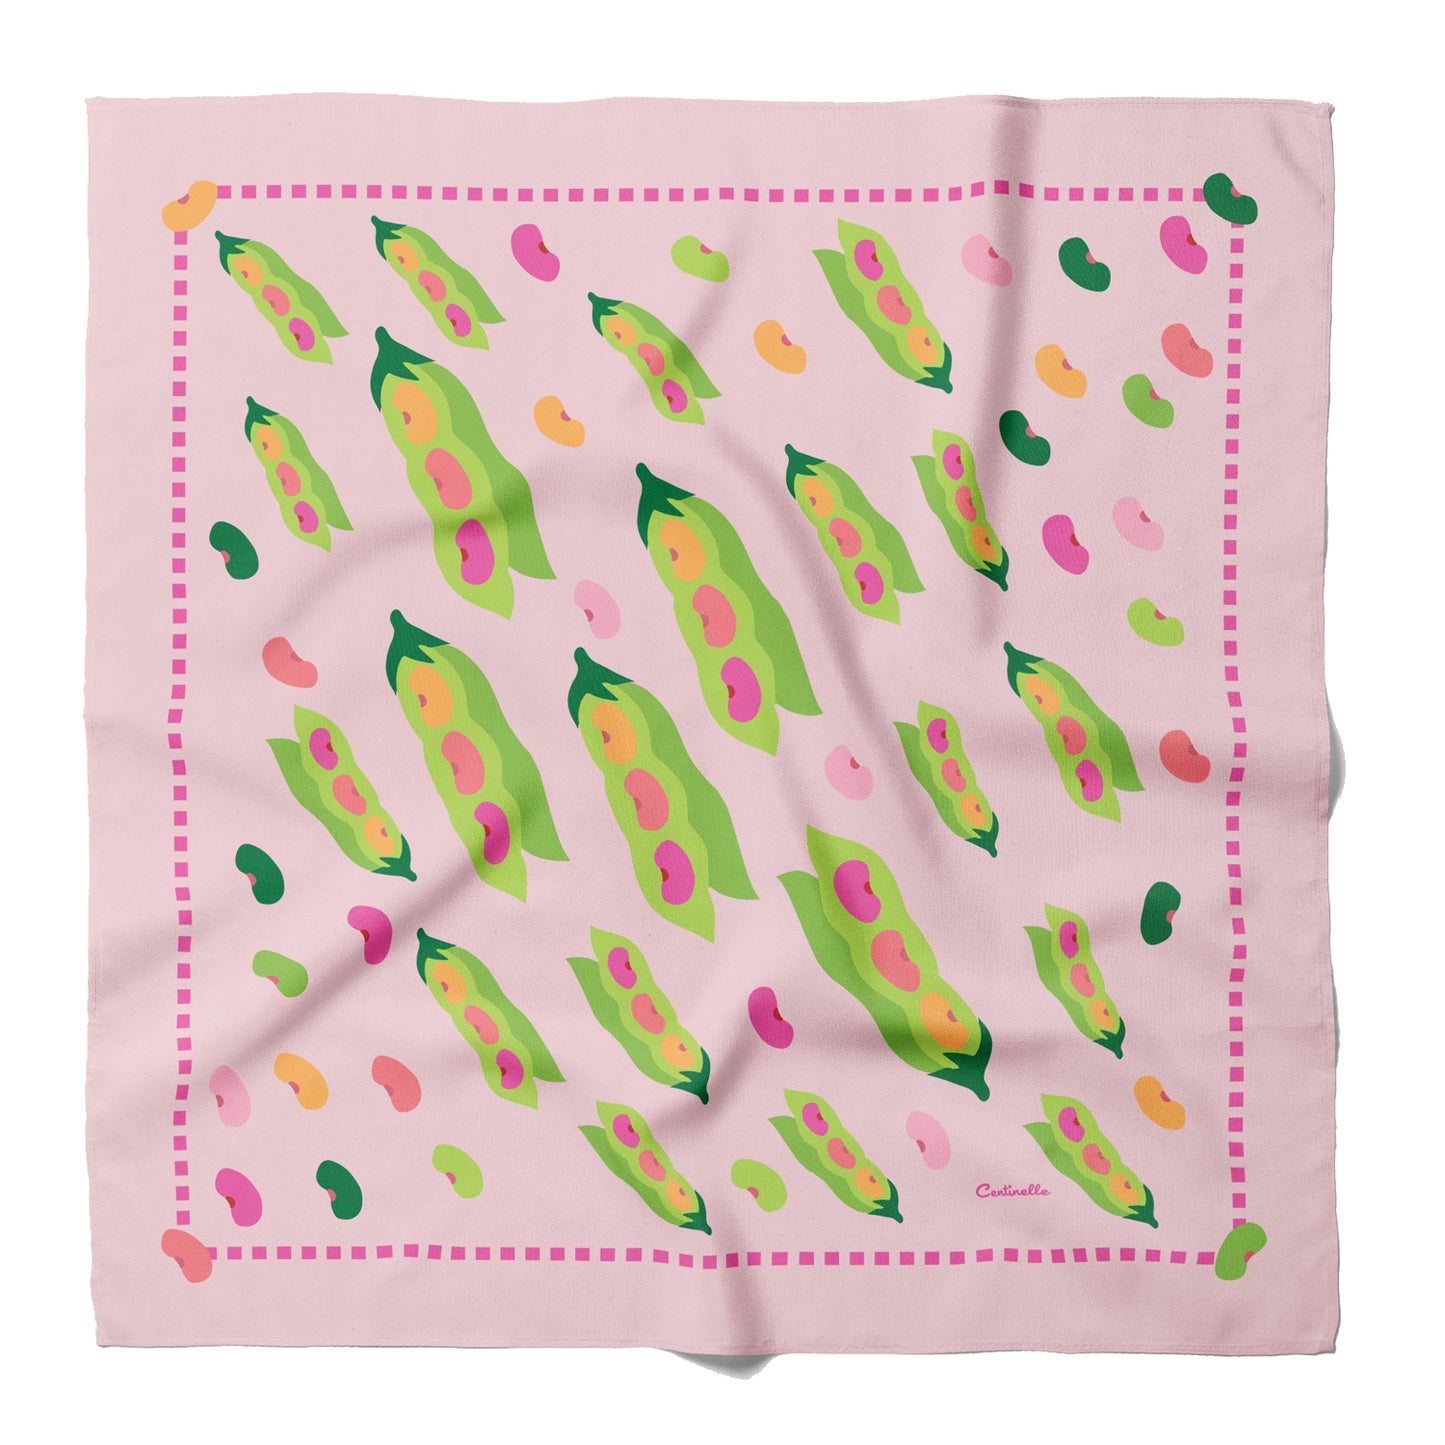 Color edamame beans on pink cotton silk blend centinelle bandana.